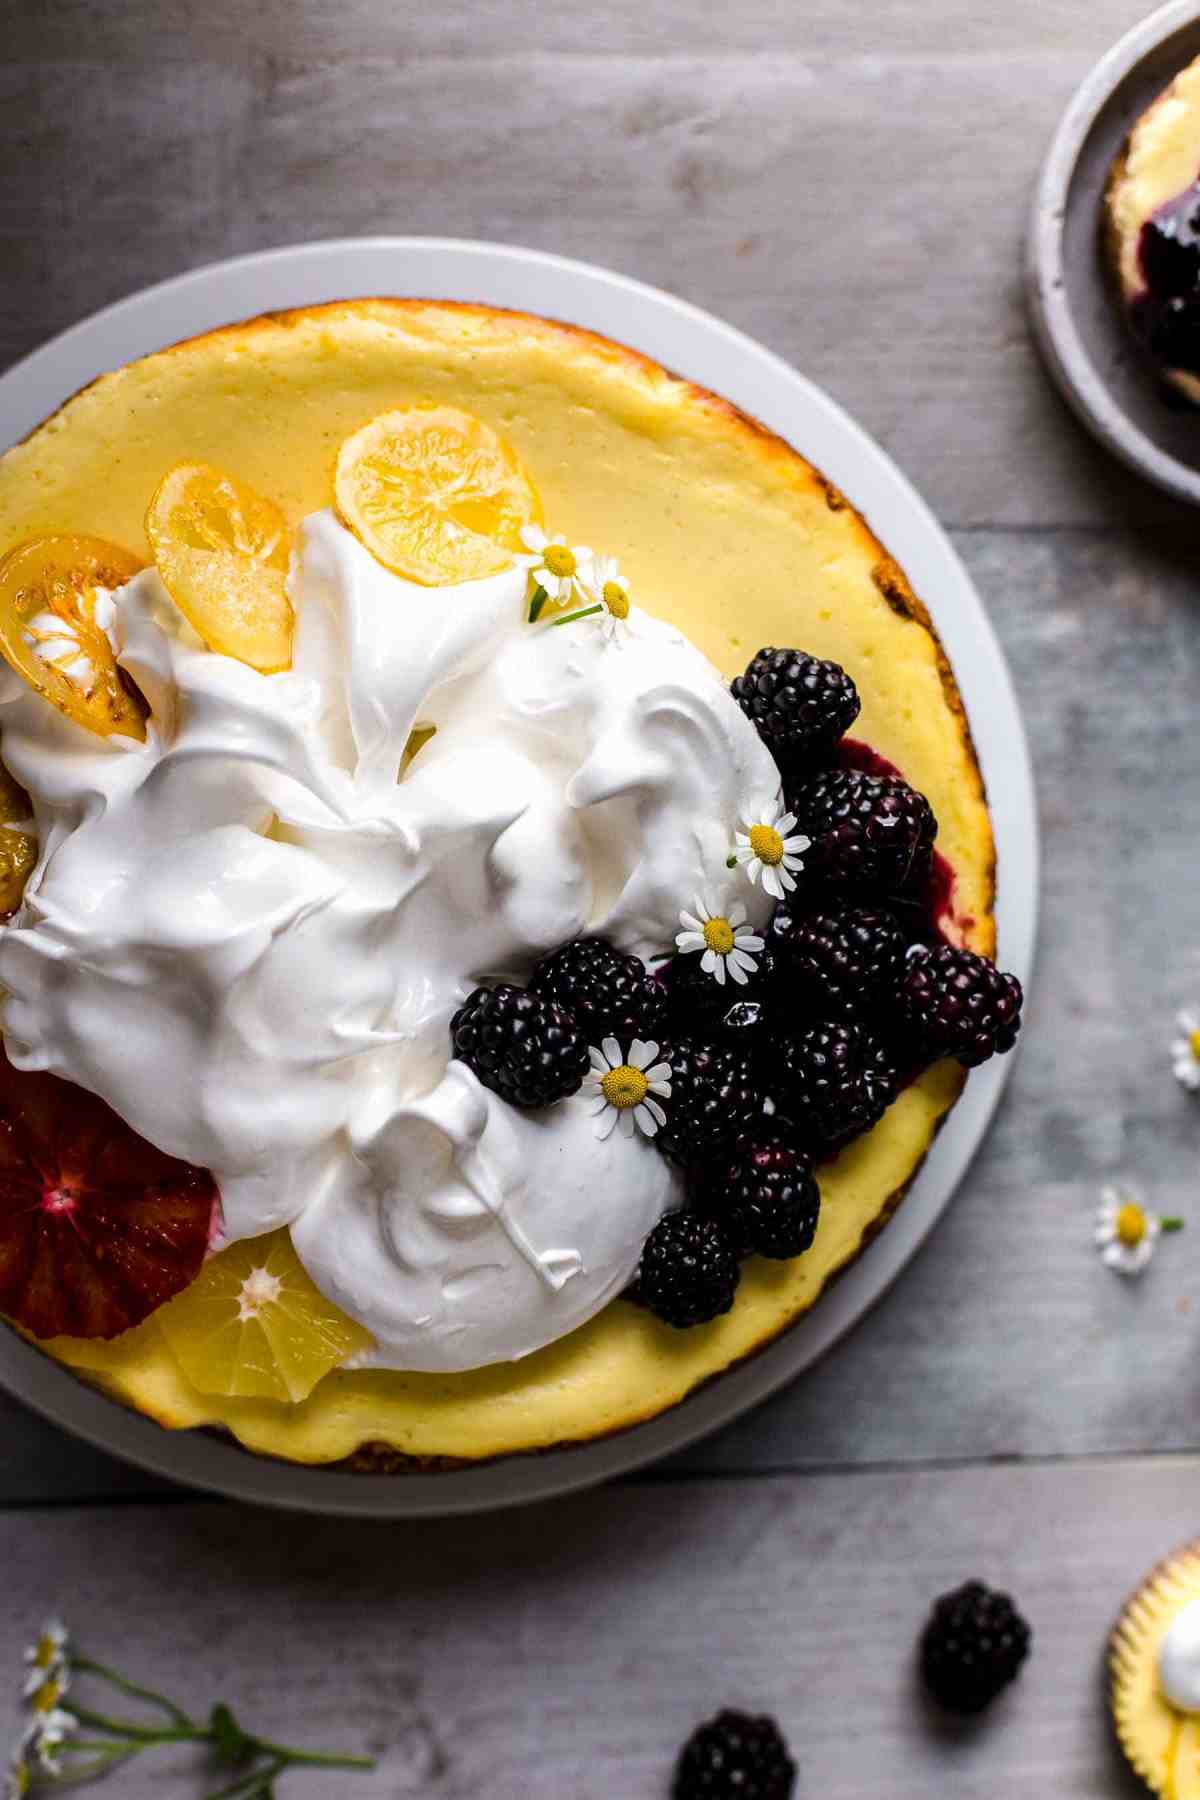 How to decorate Lemon Cheesecake